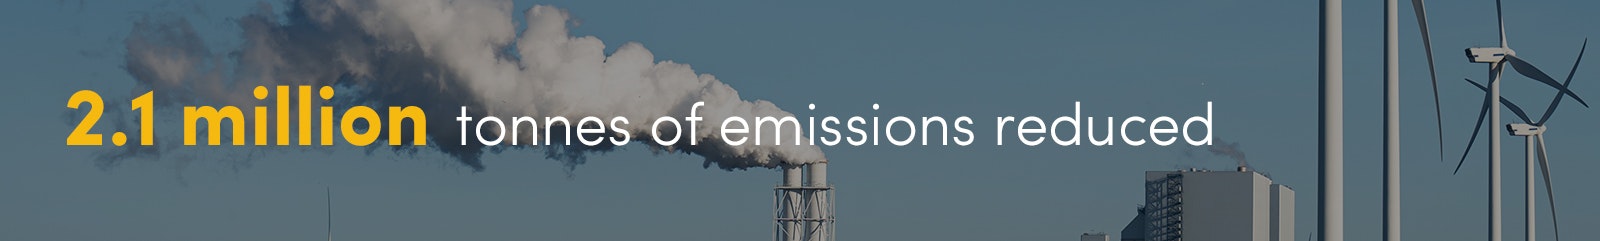 2.1 million tonnes of emissions reduced